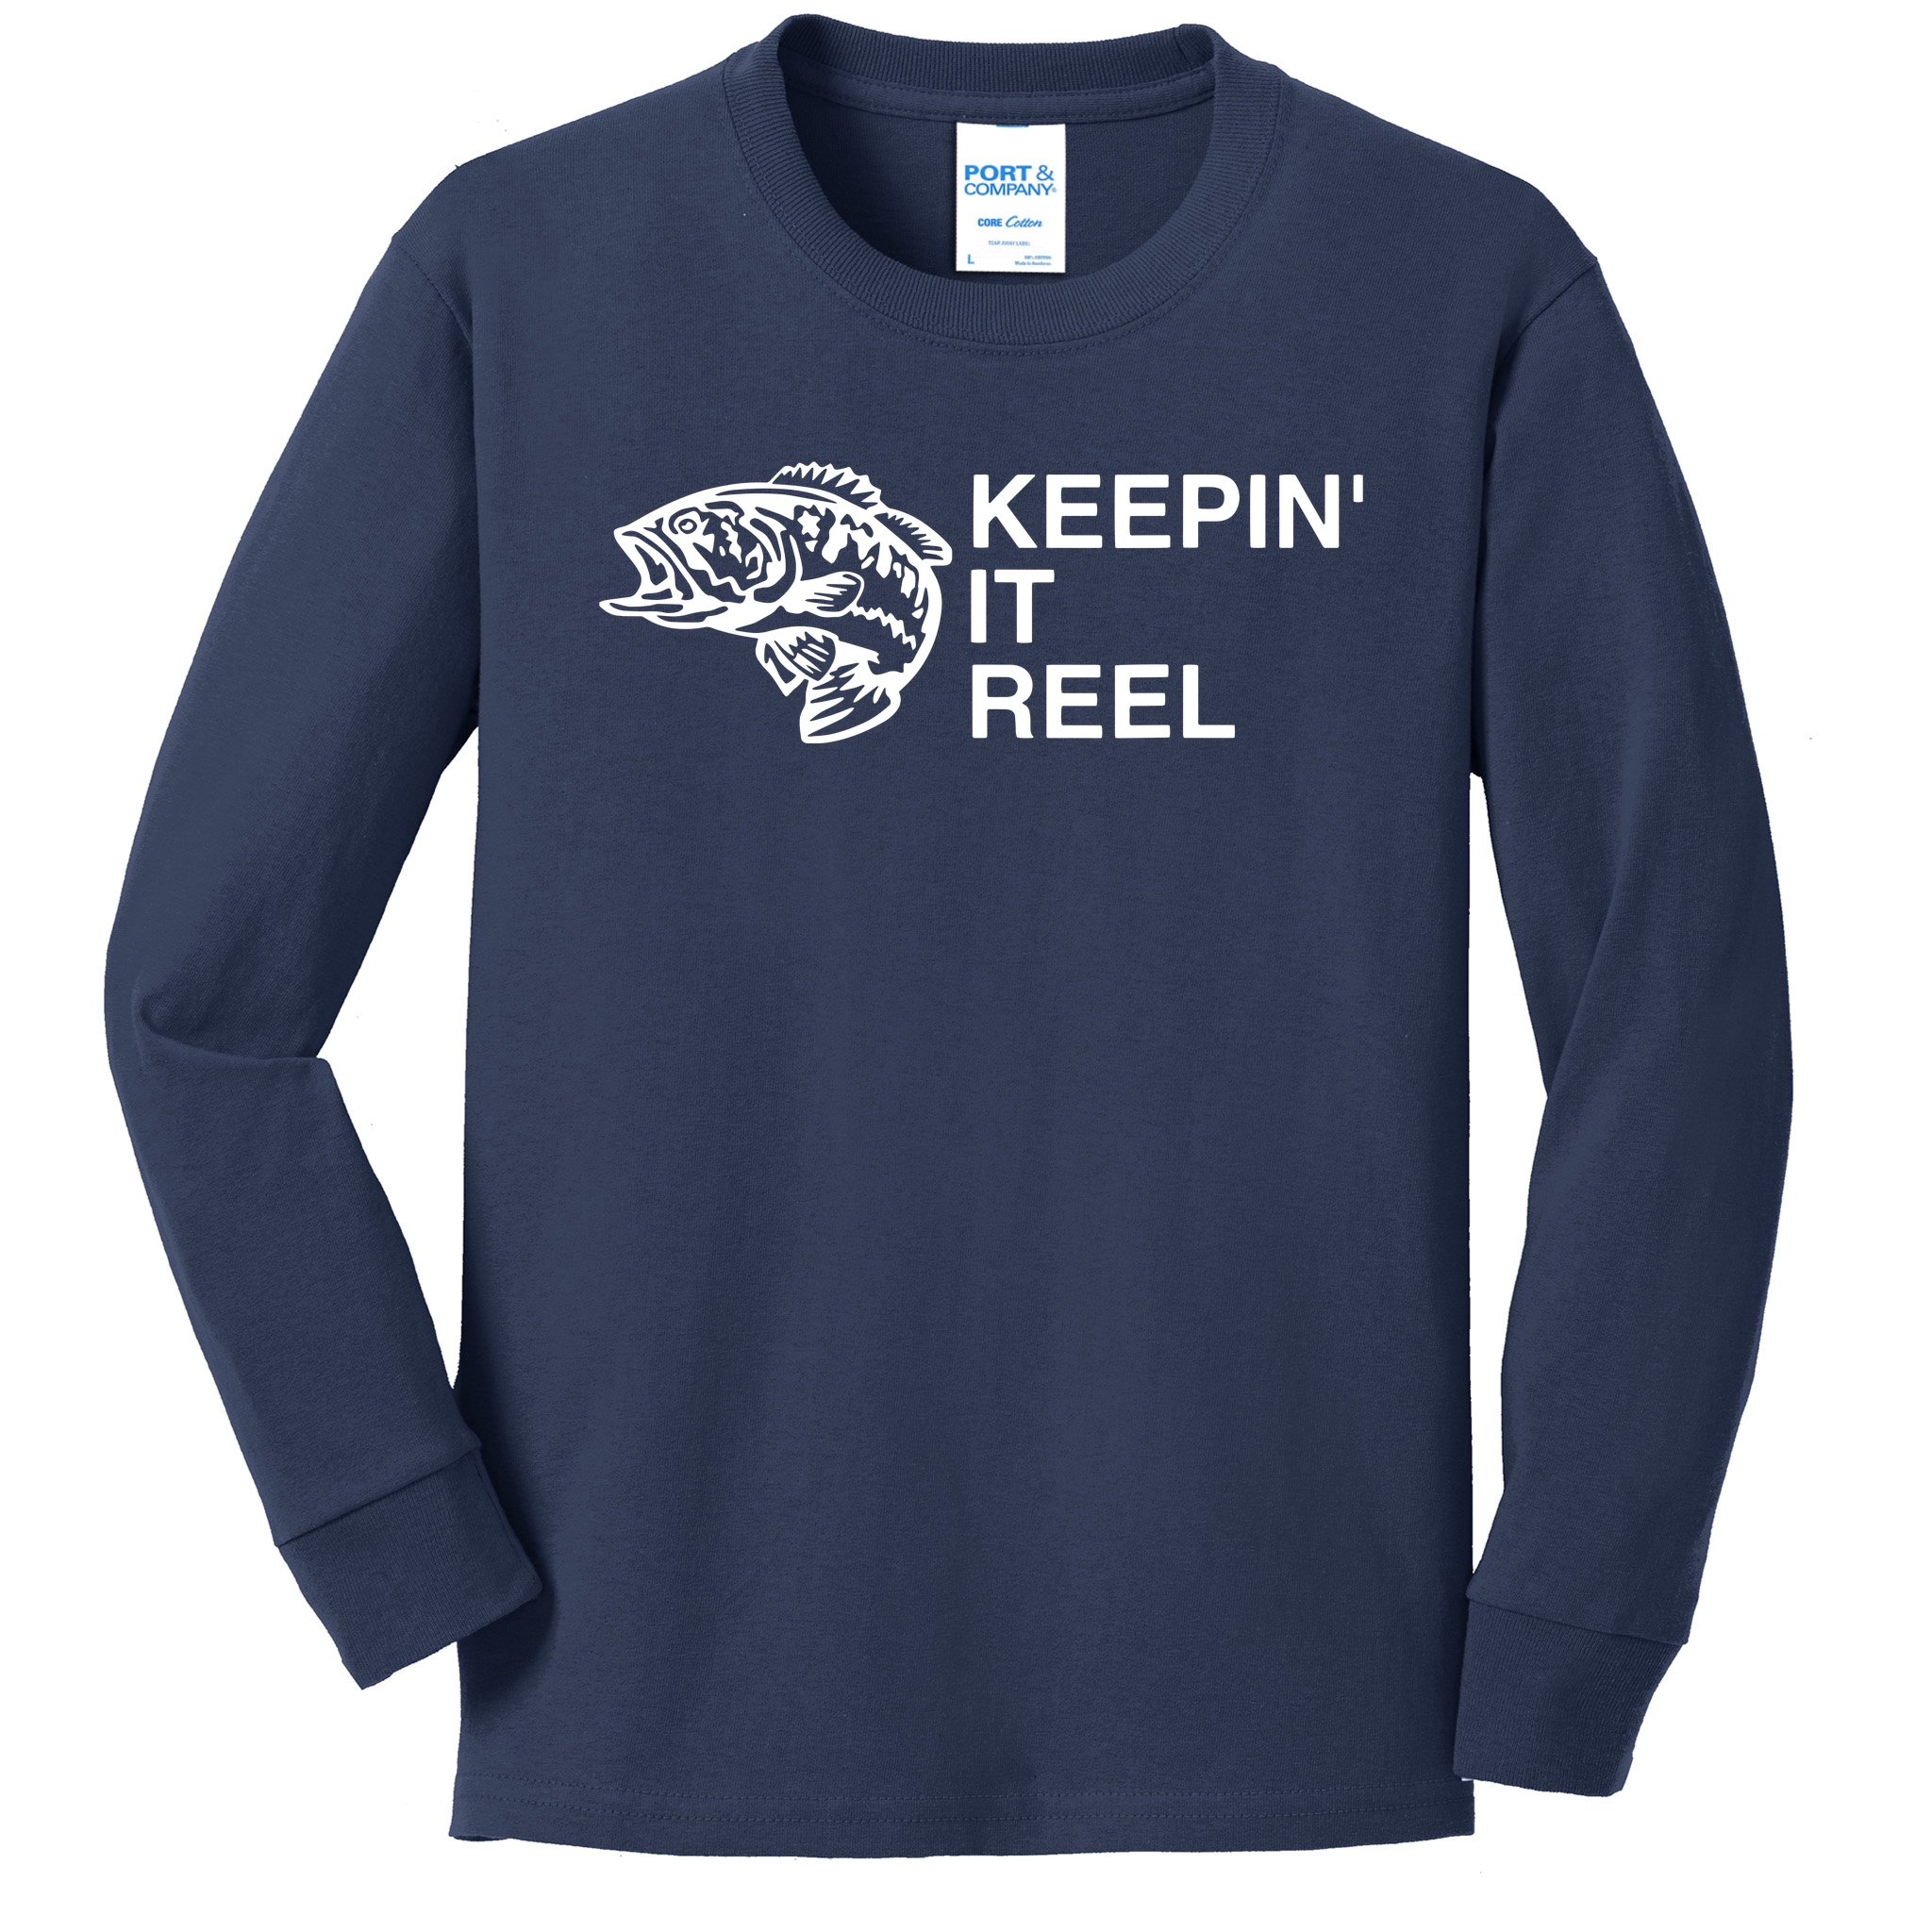 https://images3.teeshirtpalace.com/images/productImages/kir6800971-keeping-it-reel-shirts-funny-fishing-sayings--navy-ylt-garment.jpg